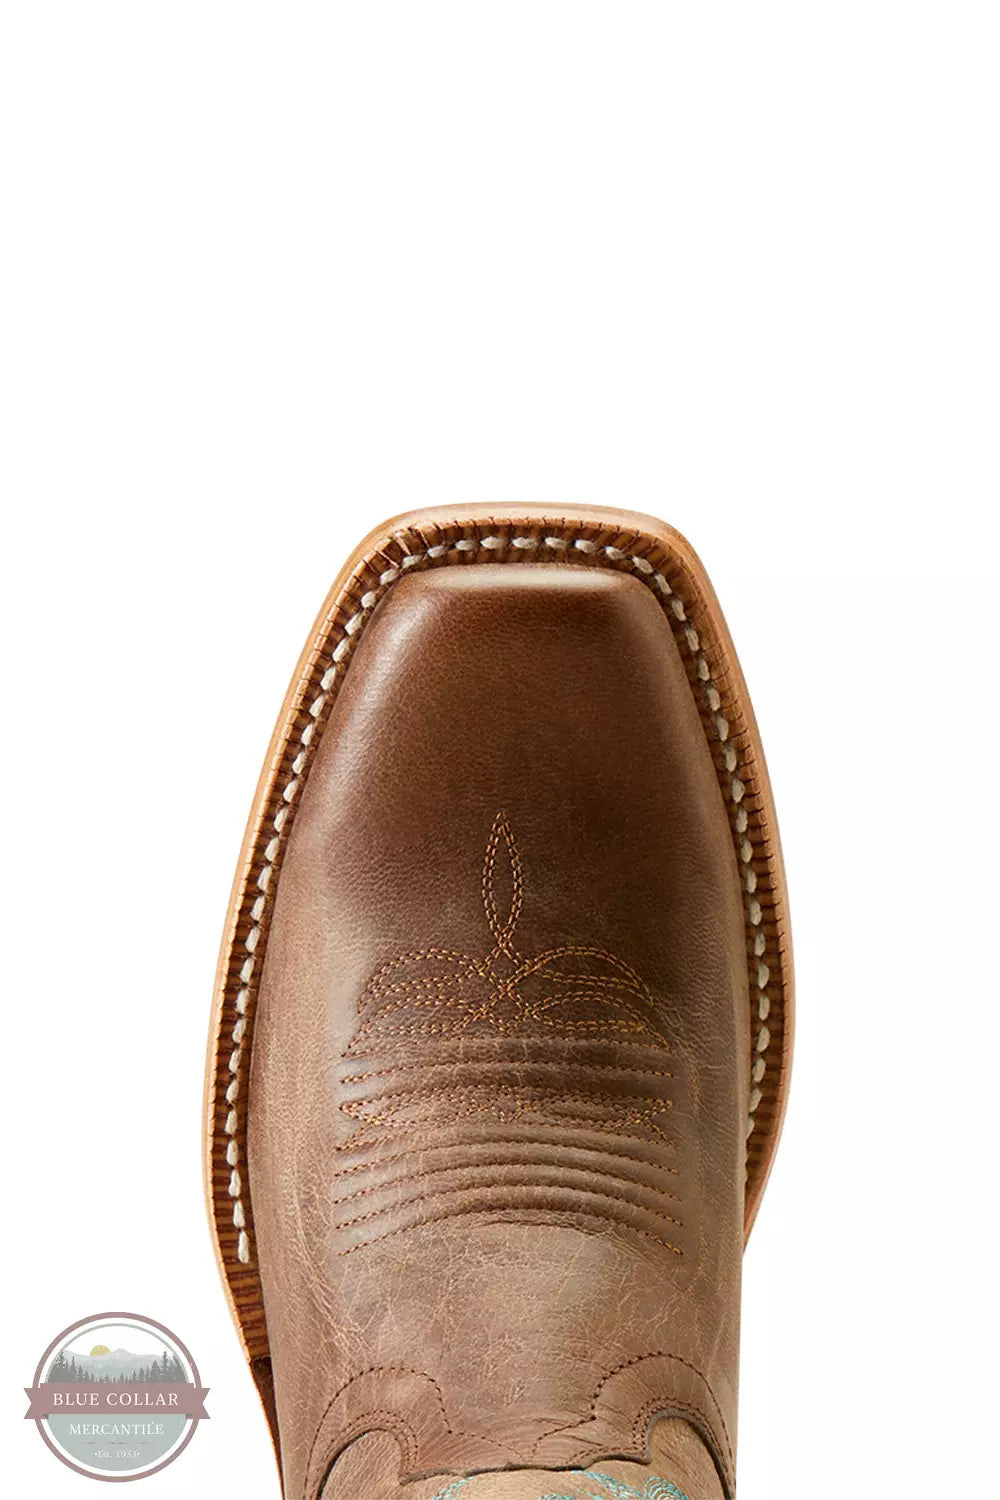 Ariat 10050889 Frontier Boon Western Boots in Pecan Brown Toe View